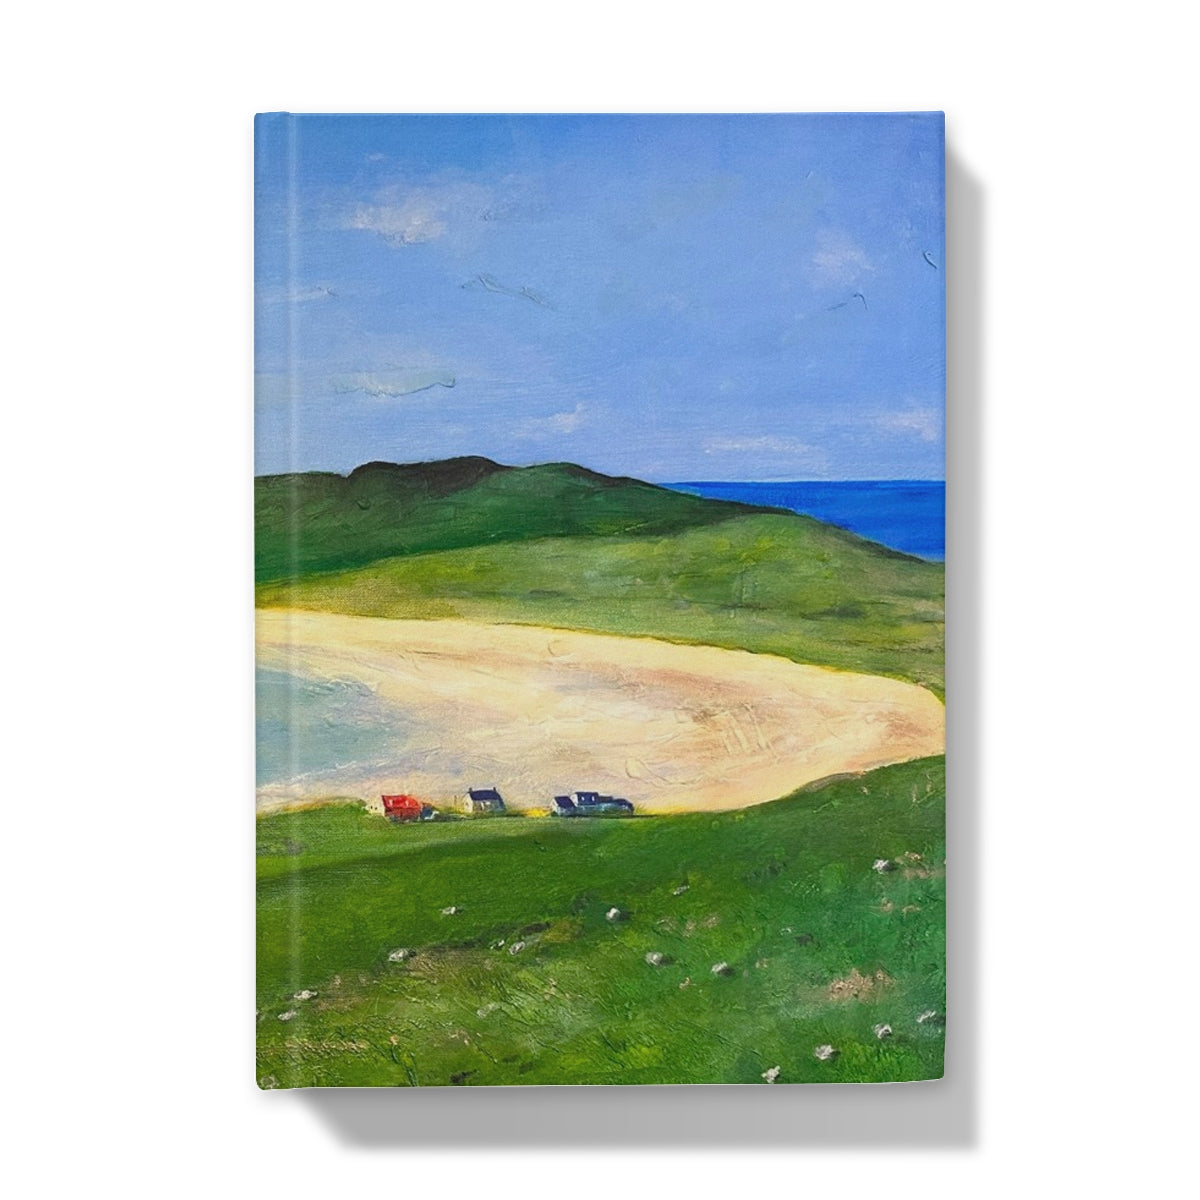 Balephuil Beach Tiree Art Gifts Hardback Journal-Journals & Notebooks-Hebridean Islands Art Gallery-A4-Plain-Paintings, Prints, Homeware, Art Gifts From Scotland By Scottish Artist Kevin Hunter